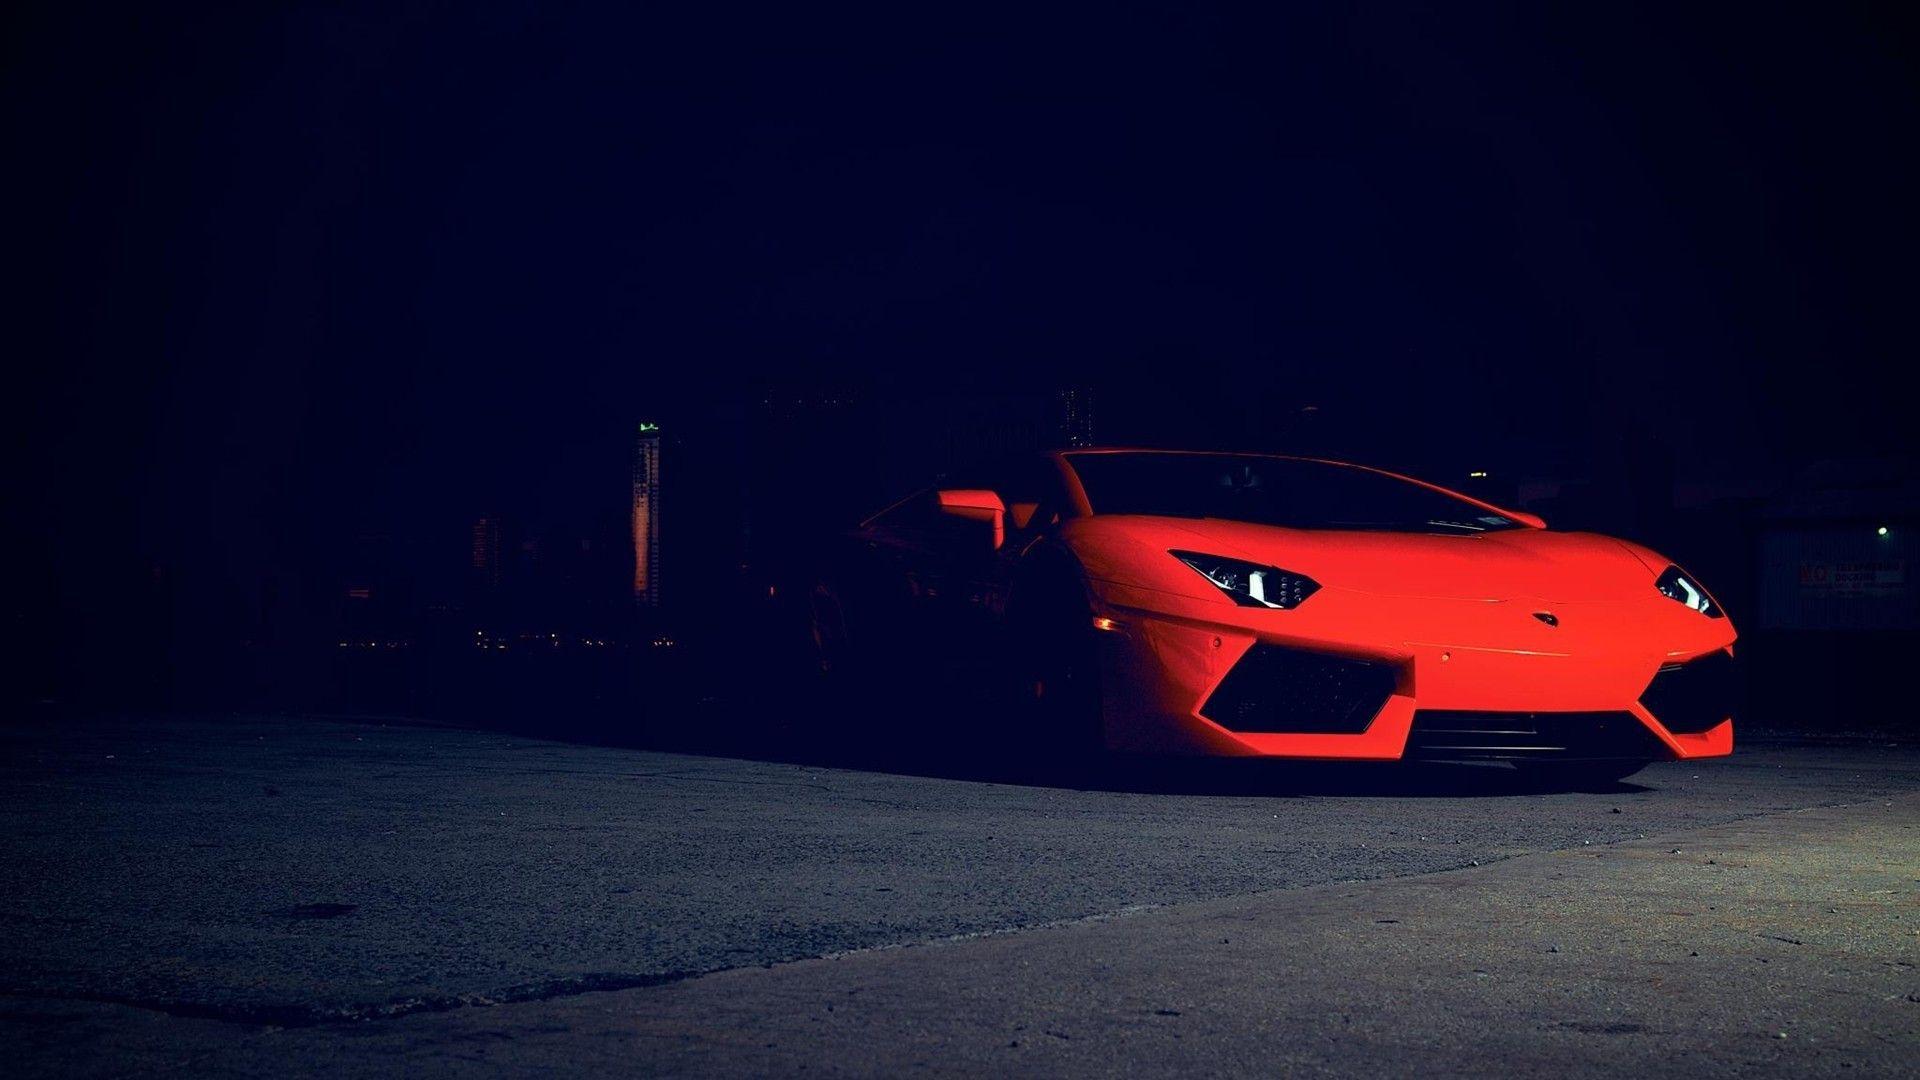 Red Lamborghini in the dark wallpaper and image